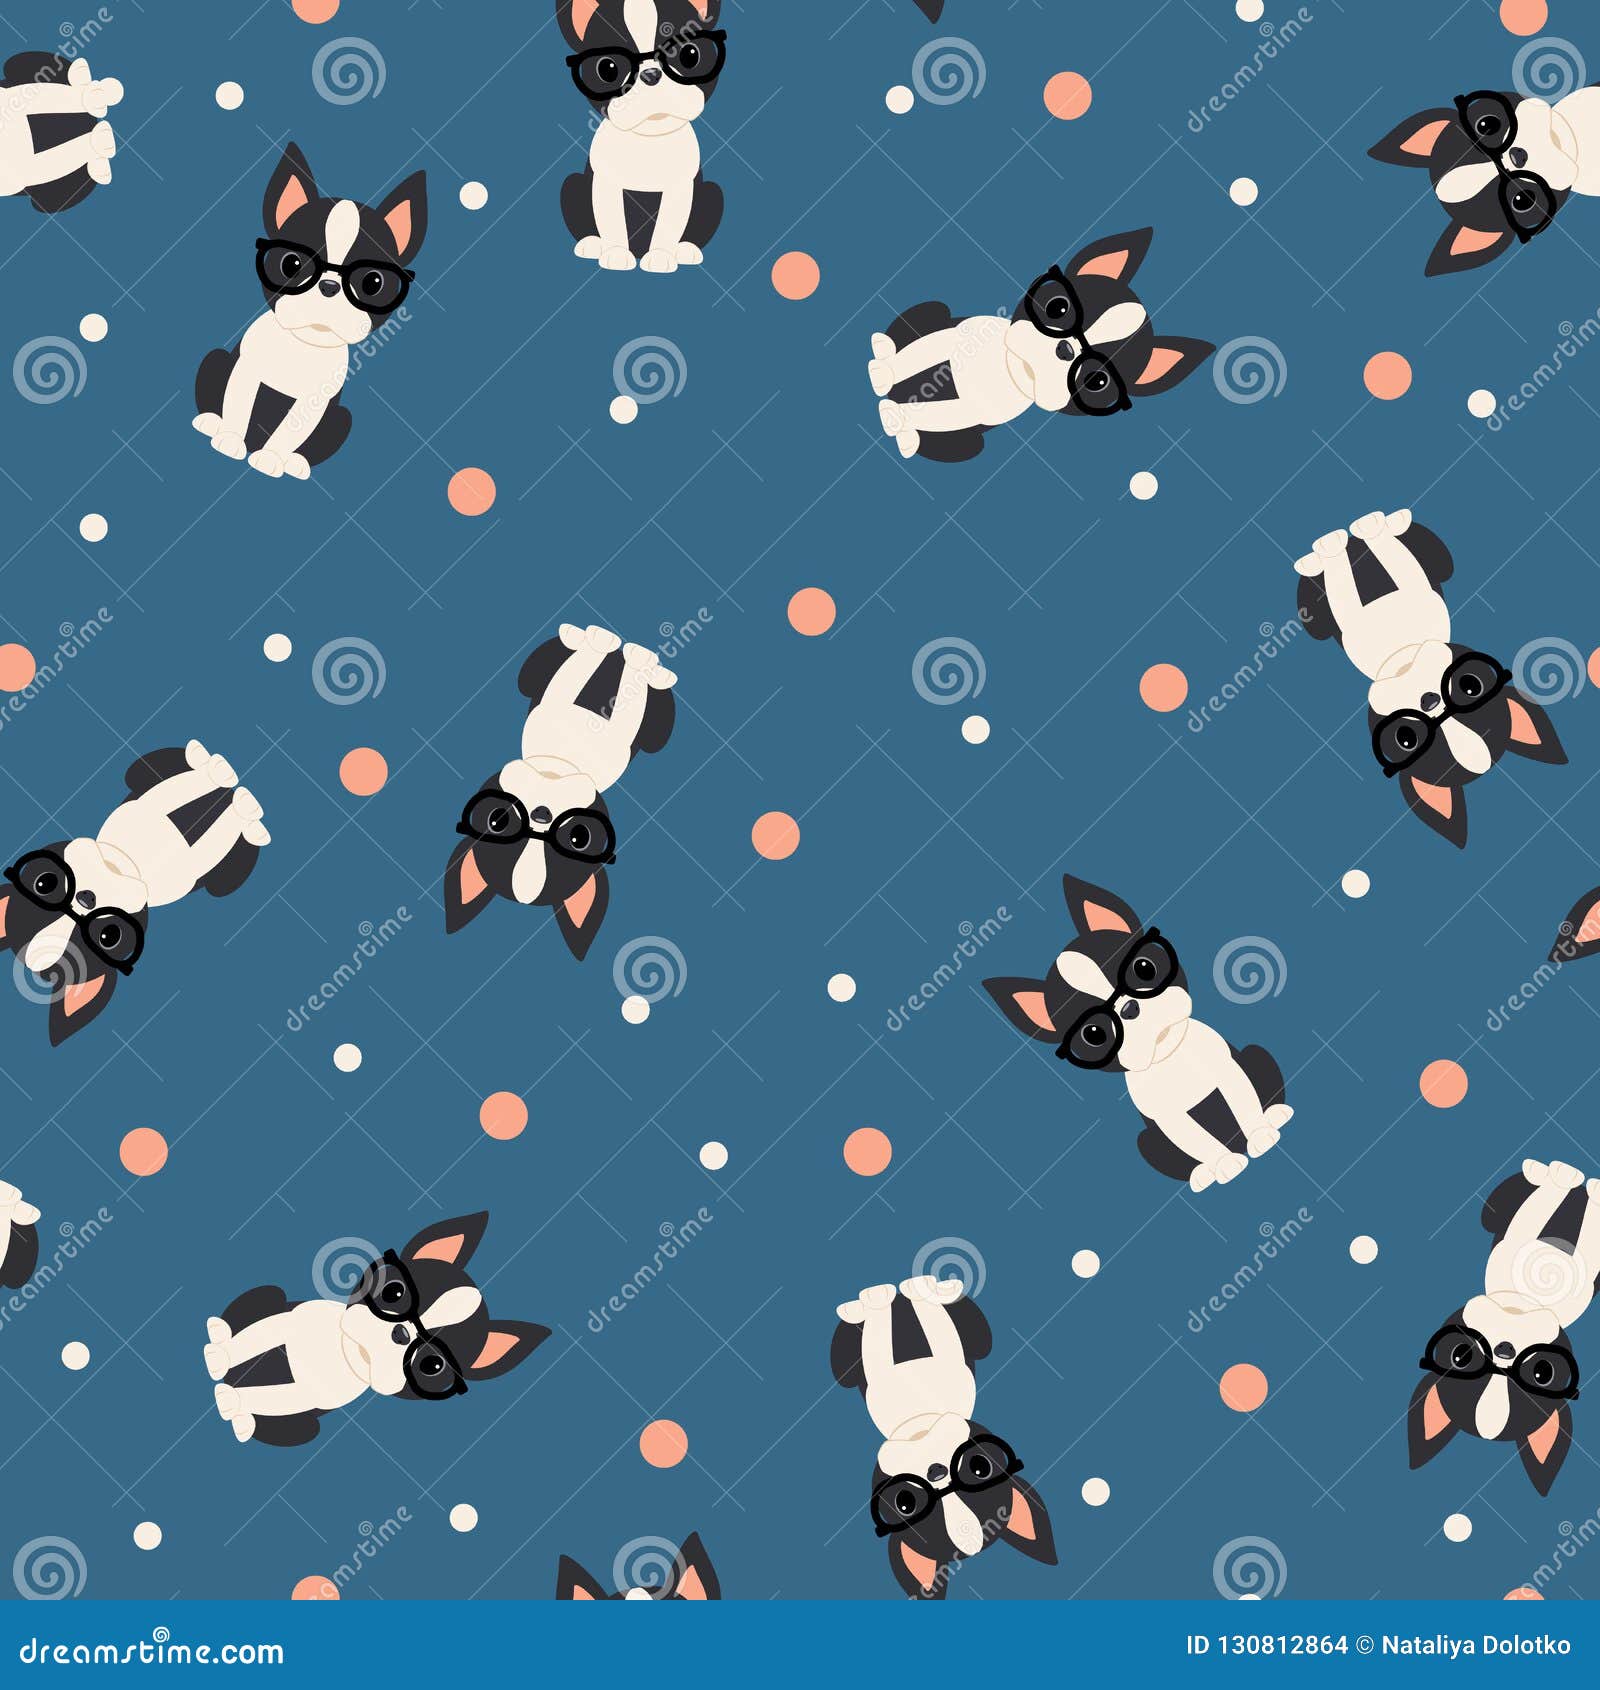 23 Boston Terrier Dogs Wallpapers  WallpaperSafari